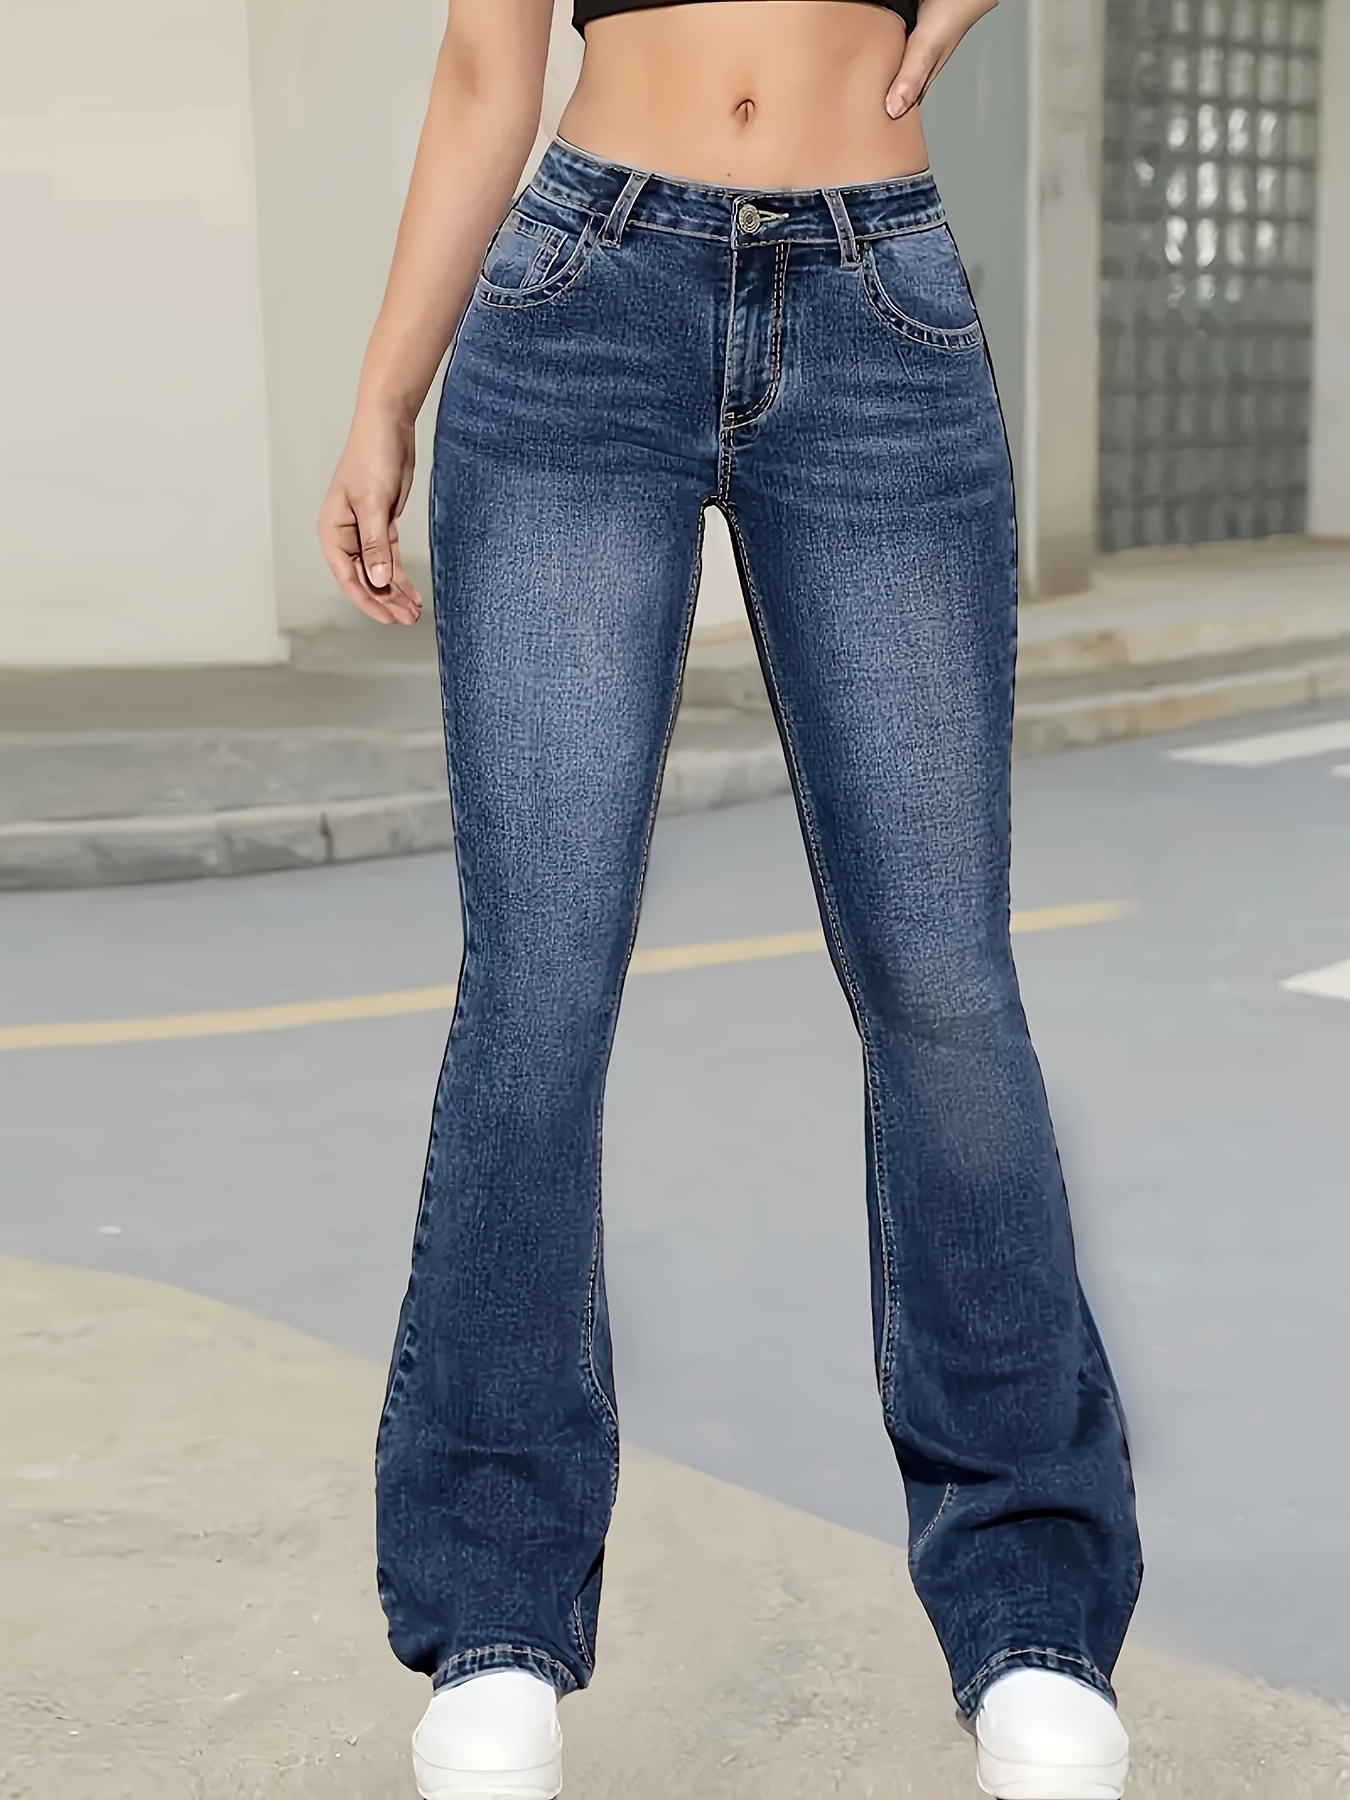 Fashion High Waist Jeans - Bell Jeans - Elastic Slim Fit Ladies